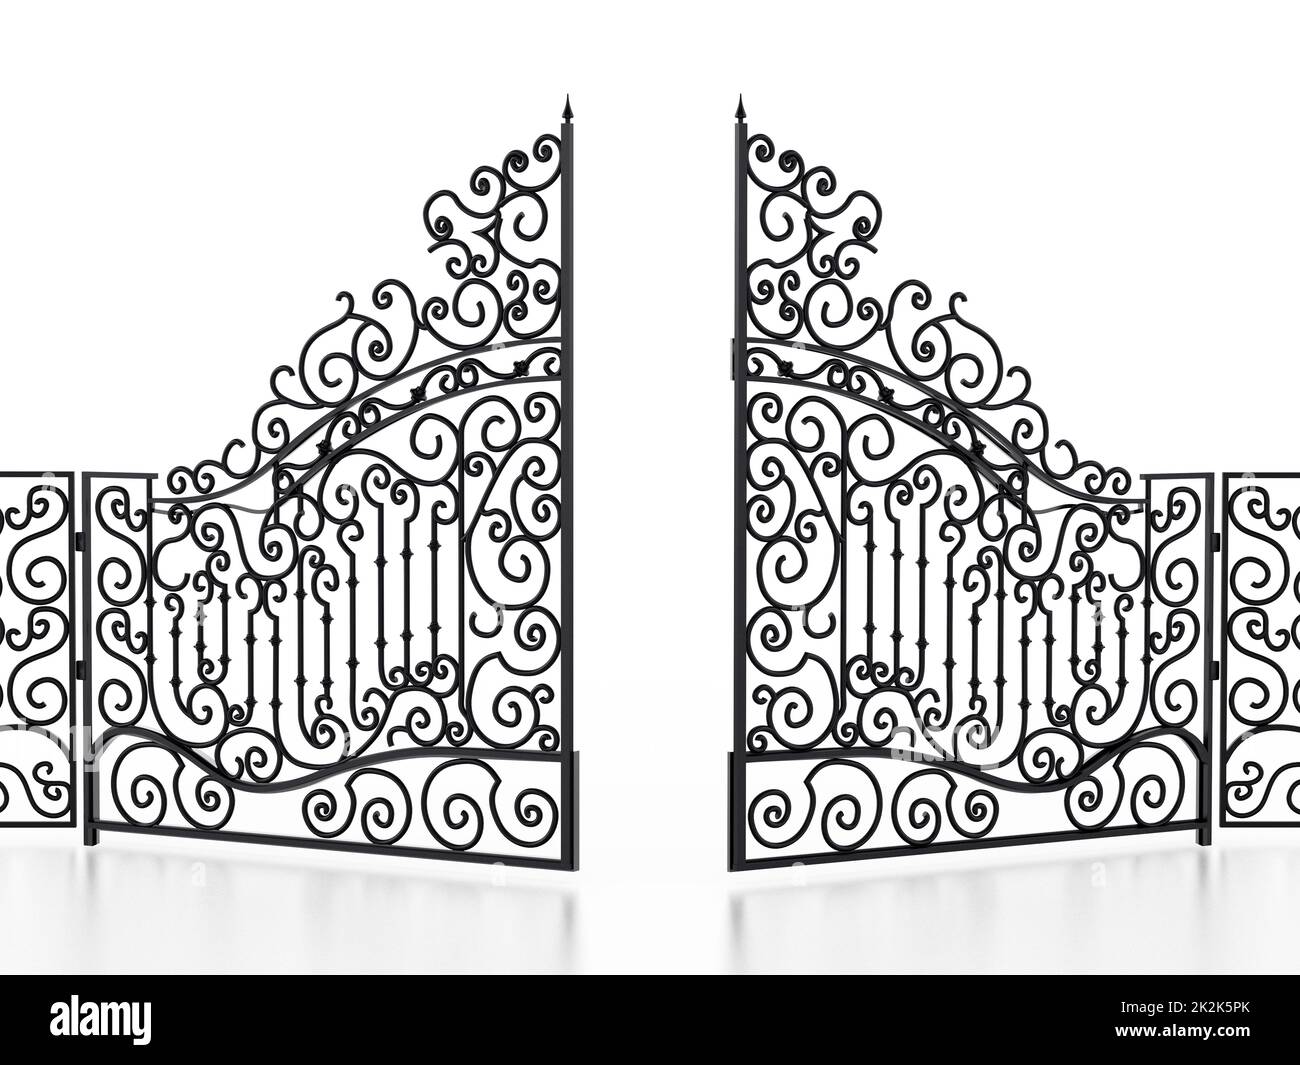 Wrought iron gate isolated on white background. 3D illustration Stock Photo